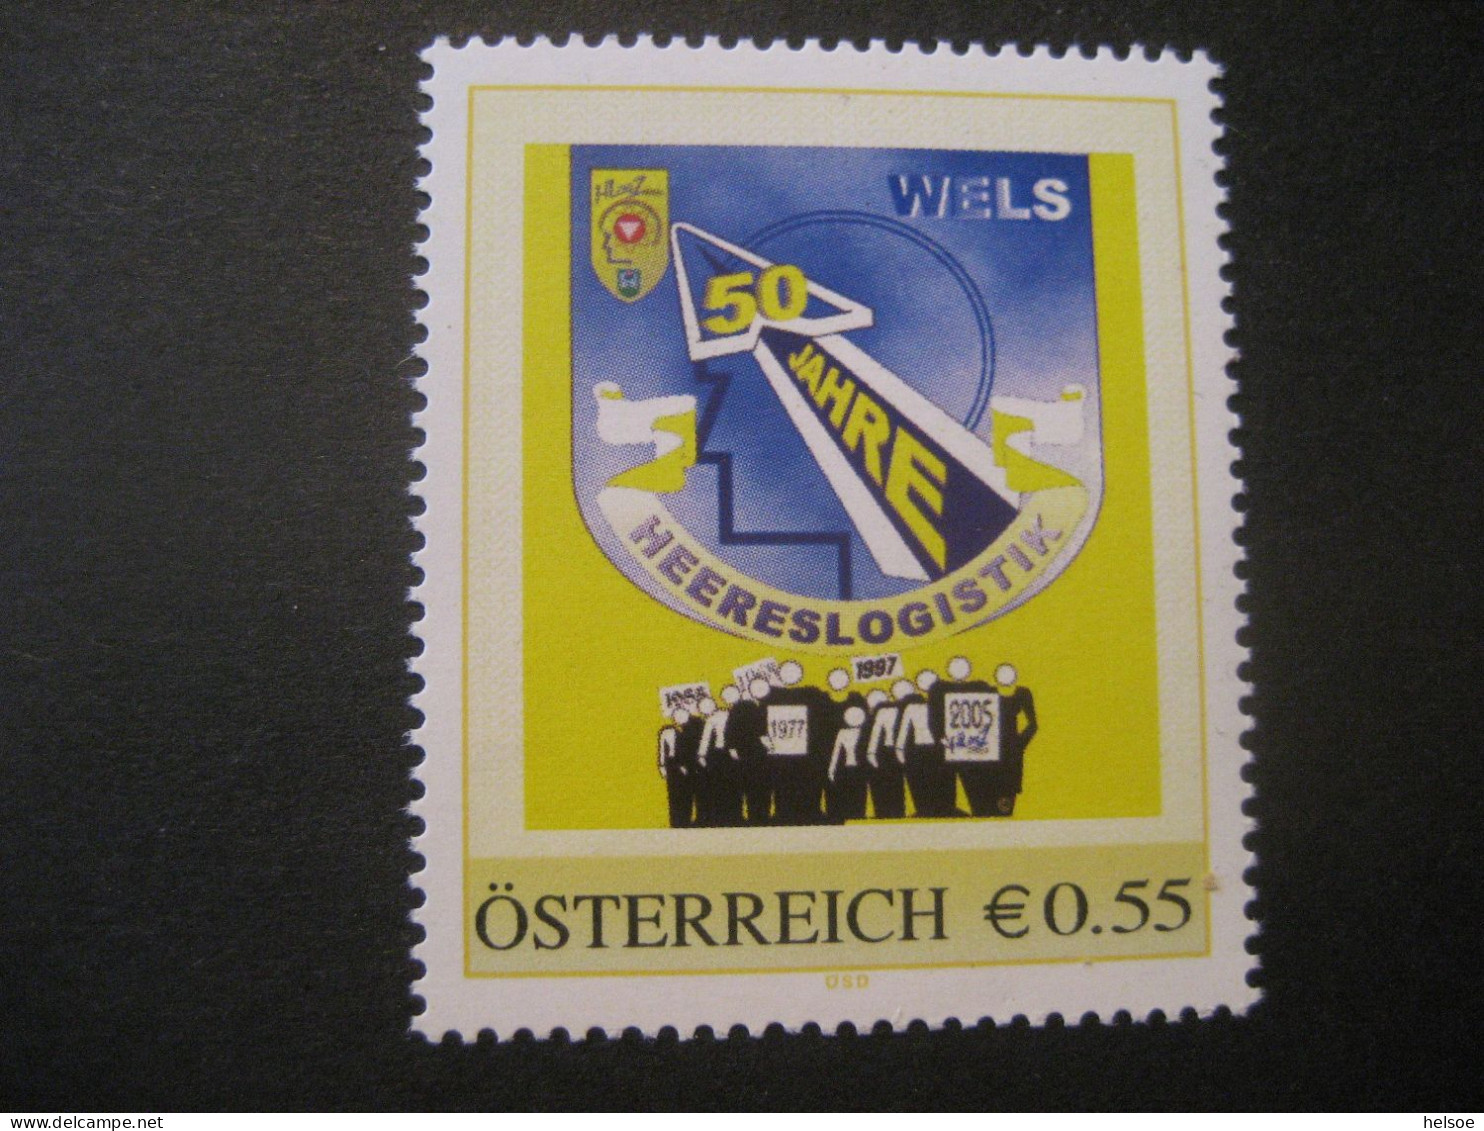 Österreich- PM 50 Jahre Heereslogistik Wels ** Ungebraucht - Persoonlijke Postzegels